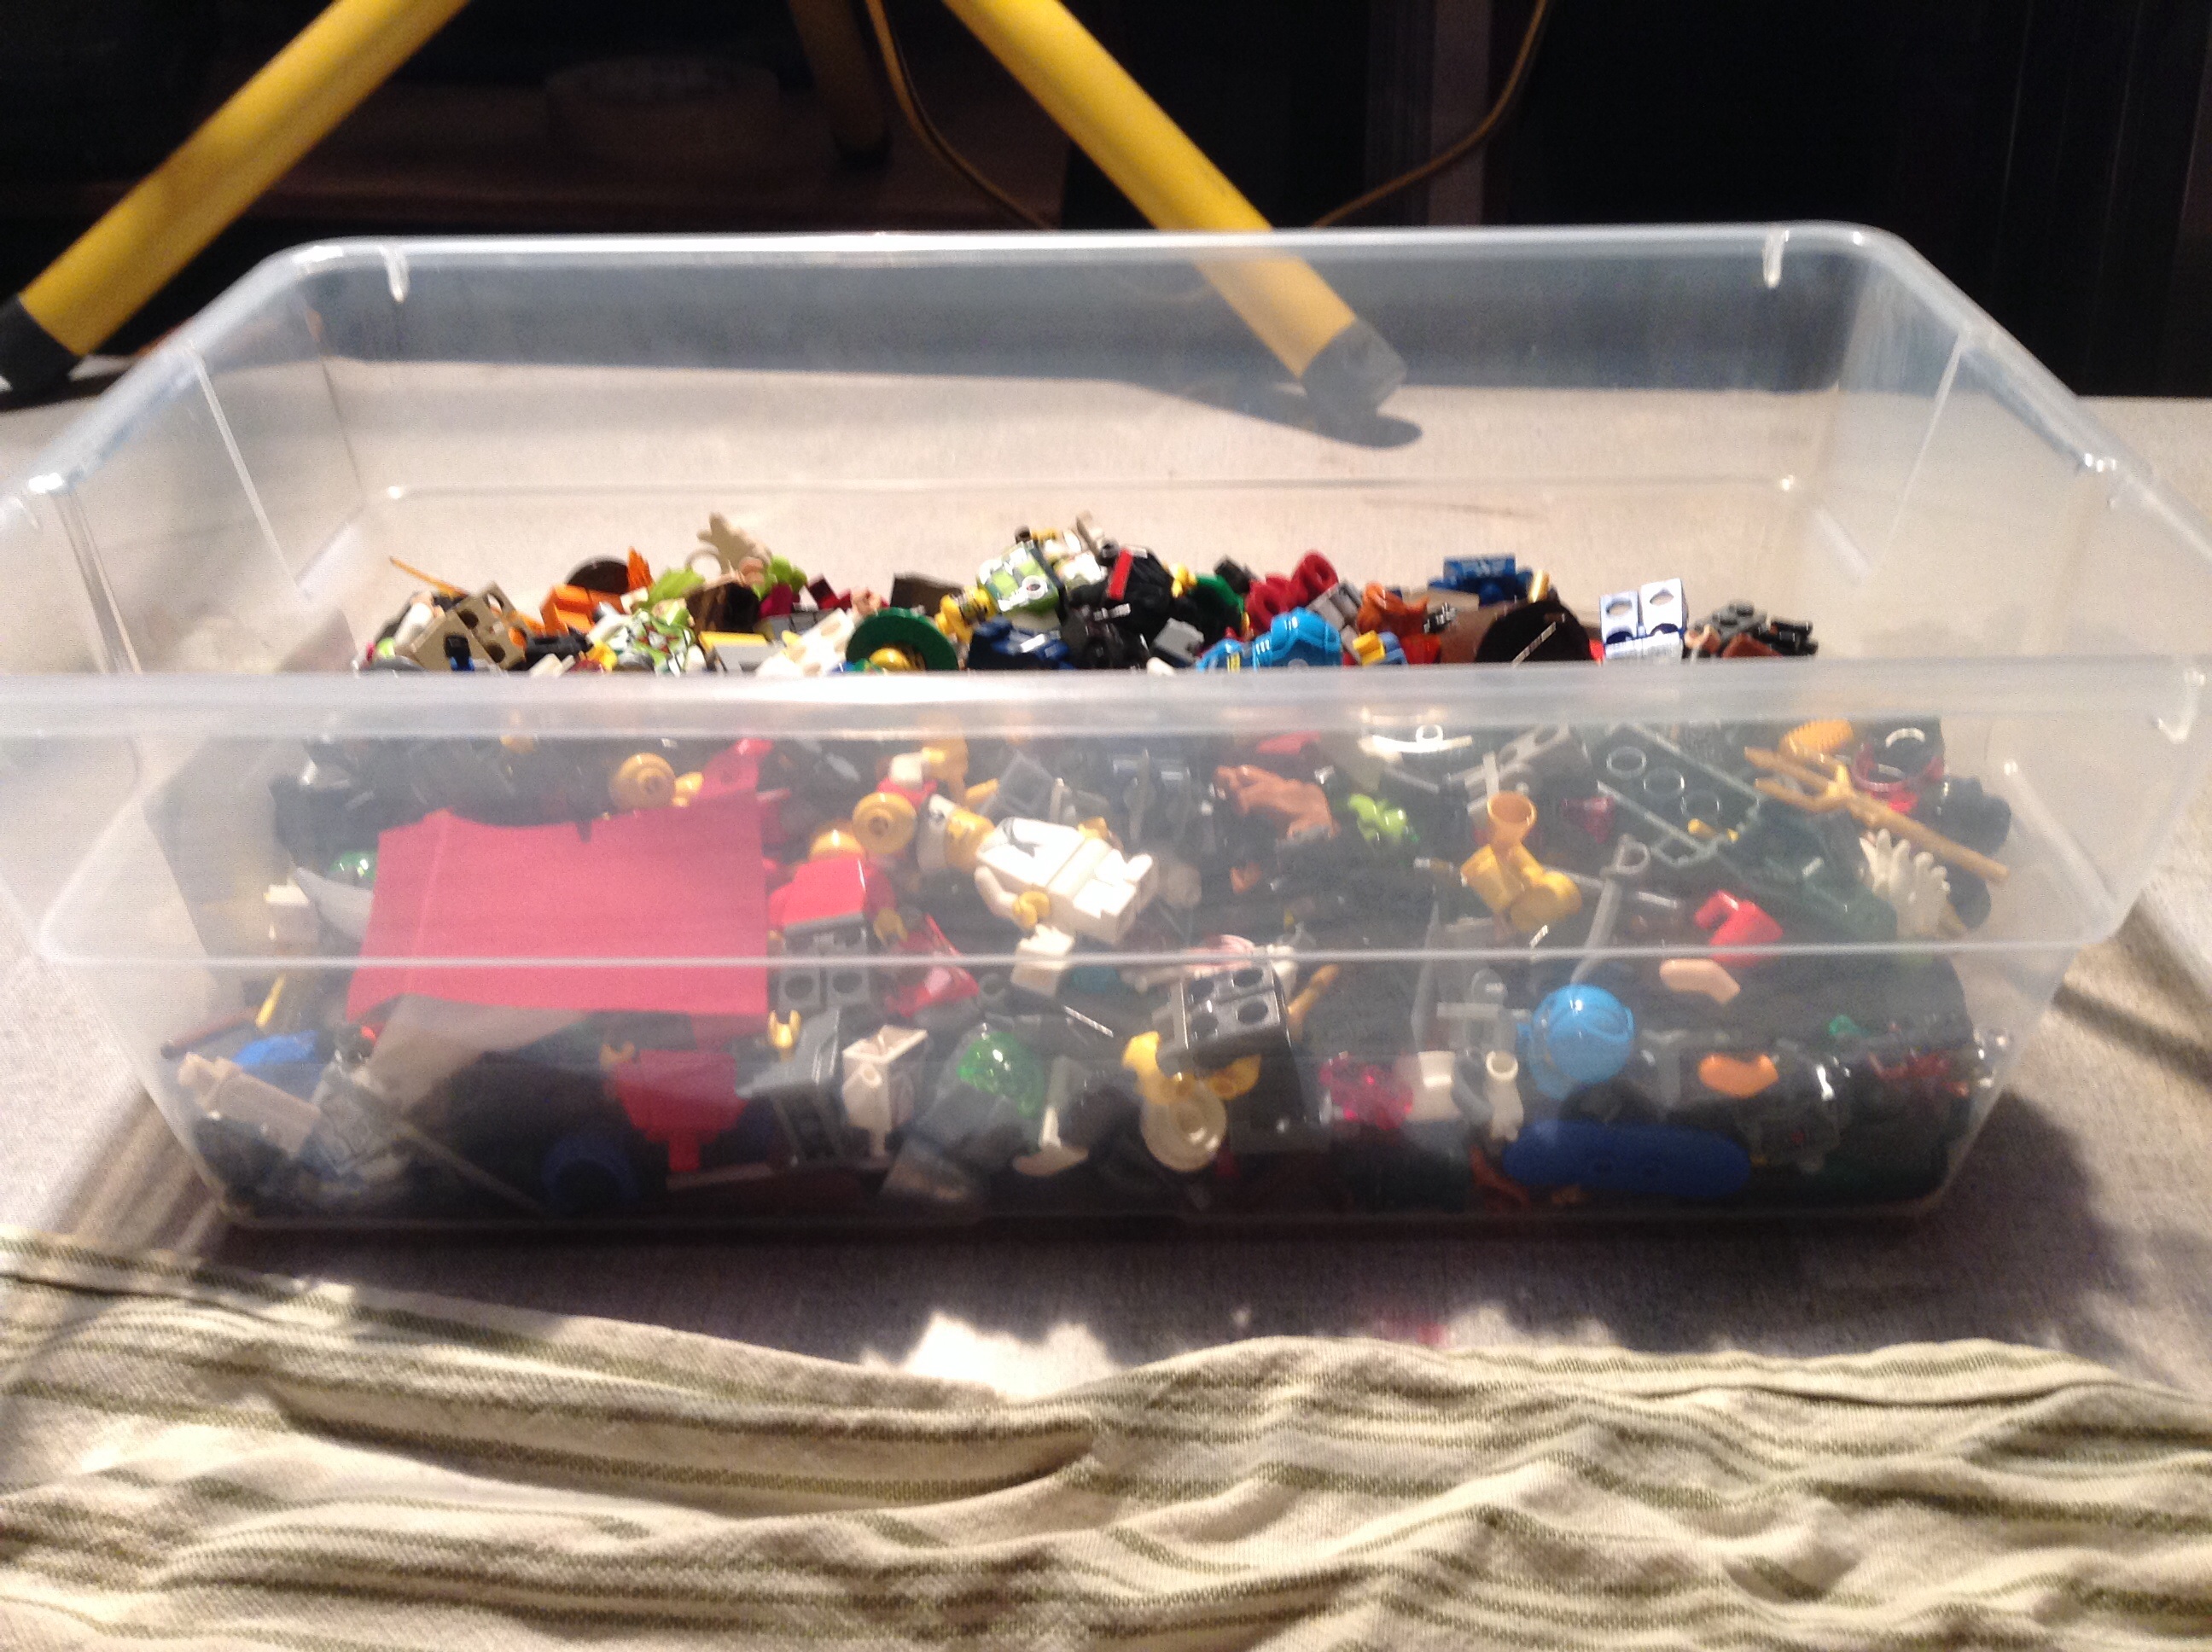 Breaking Down a Bulk LEGO Lot to Maximize Minifigure Profits